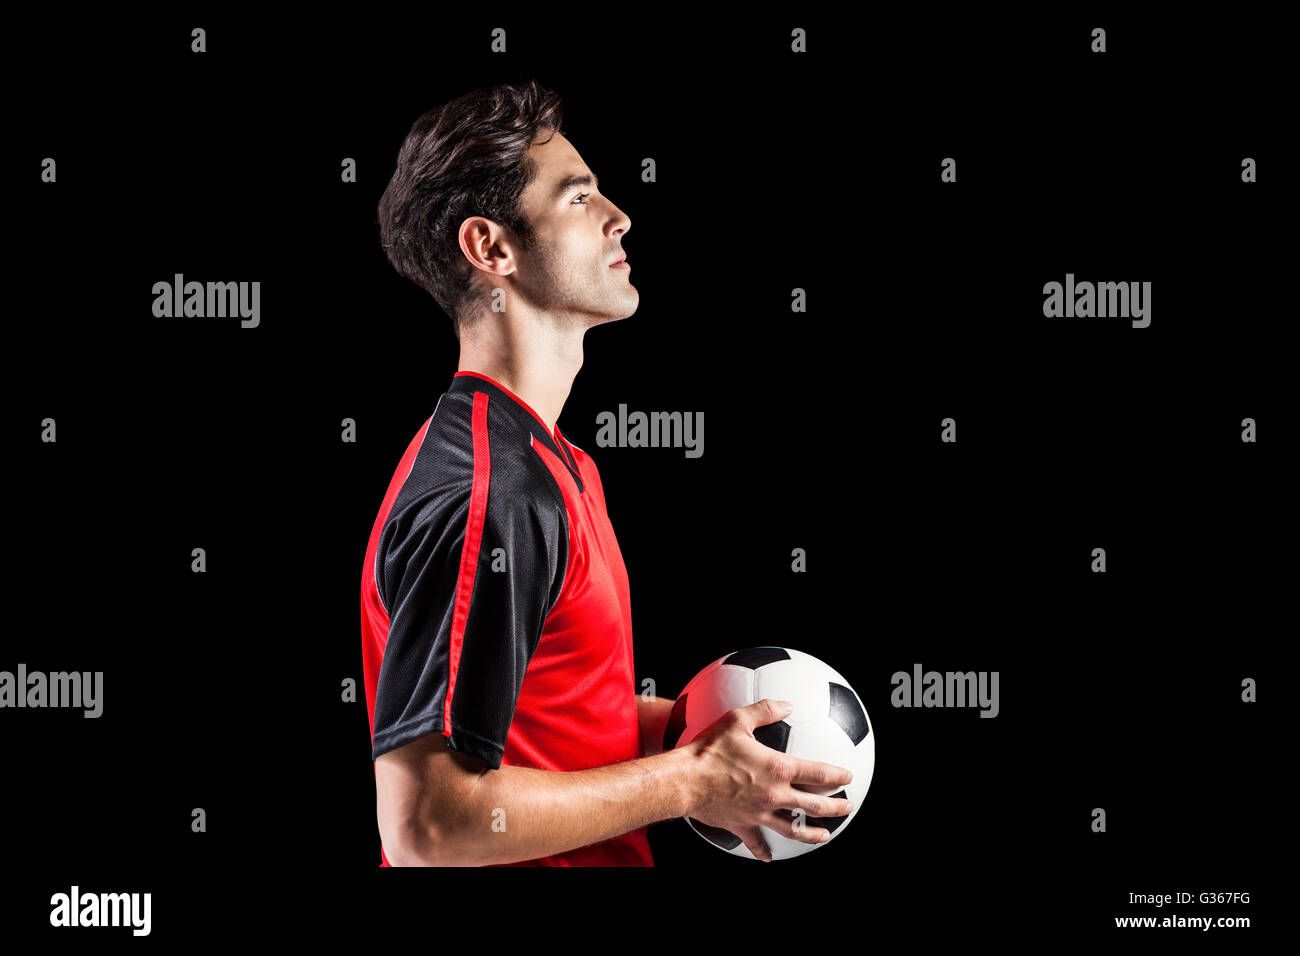 Confident male athlete holding football Stock Photo